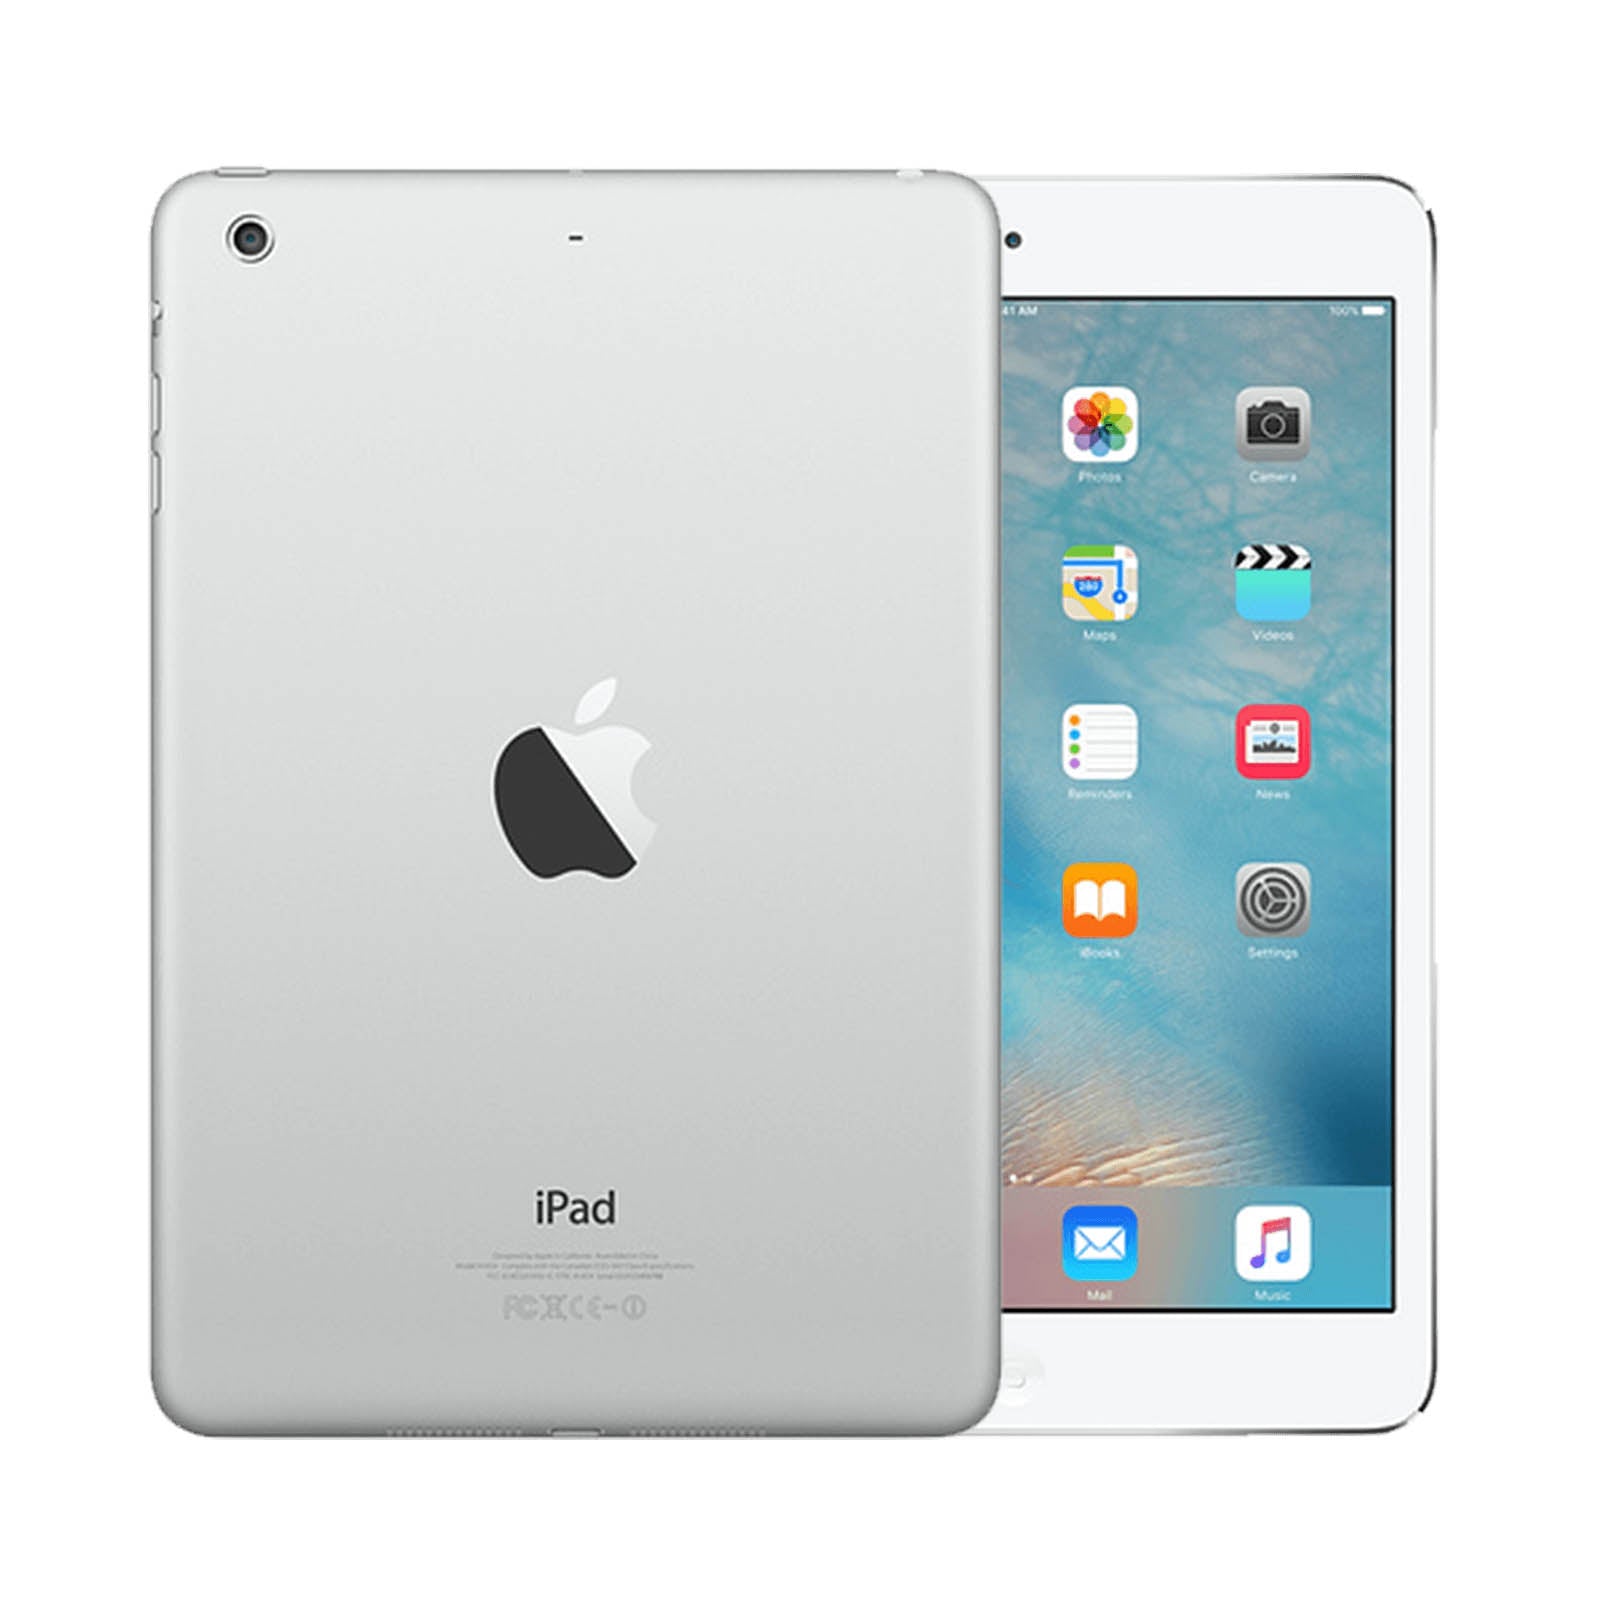 Apple iPad mini 2 128GB White Very Good - Unlocked